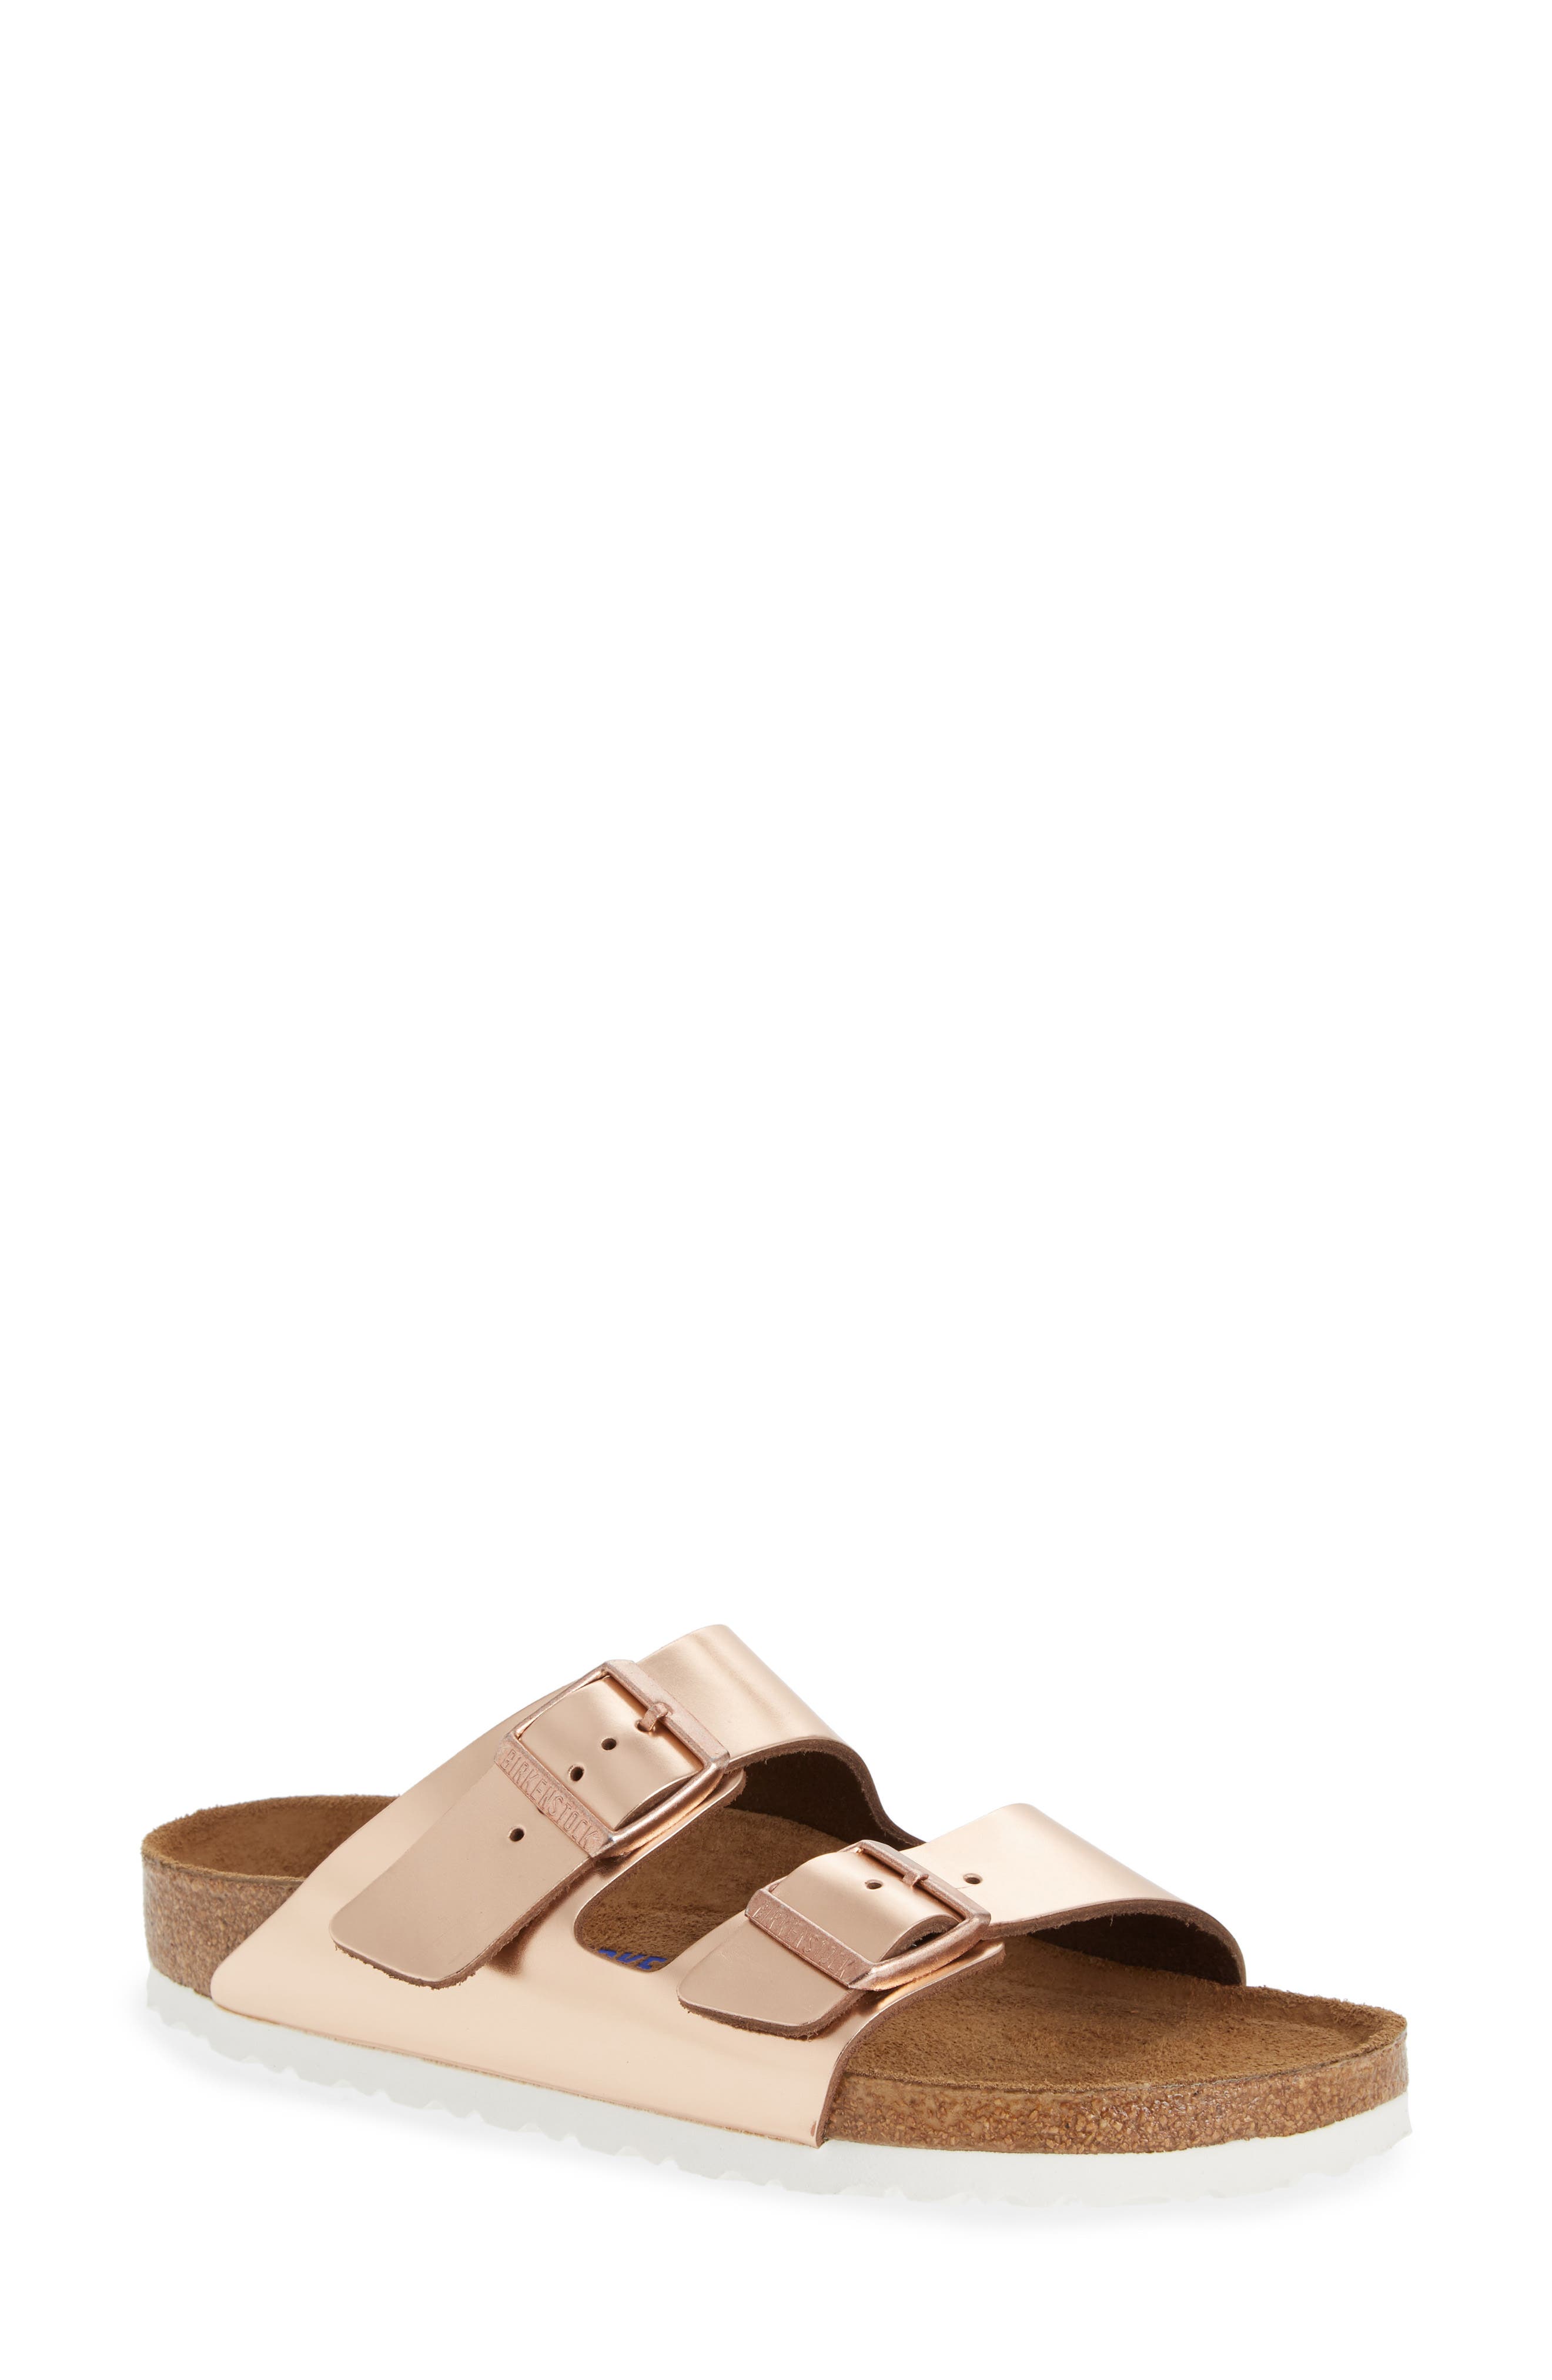 Birkenstock Arizona Soft Footbed Sandal in Copper Leather at Nordstrom, Size 5-5.5Us